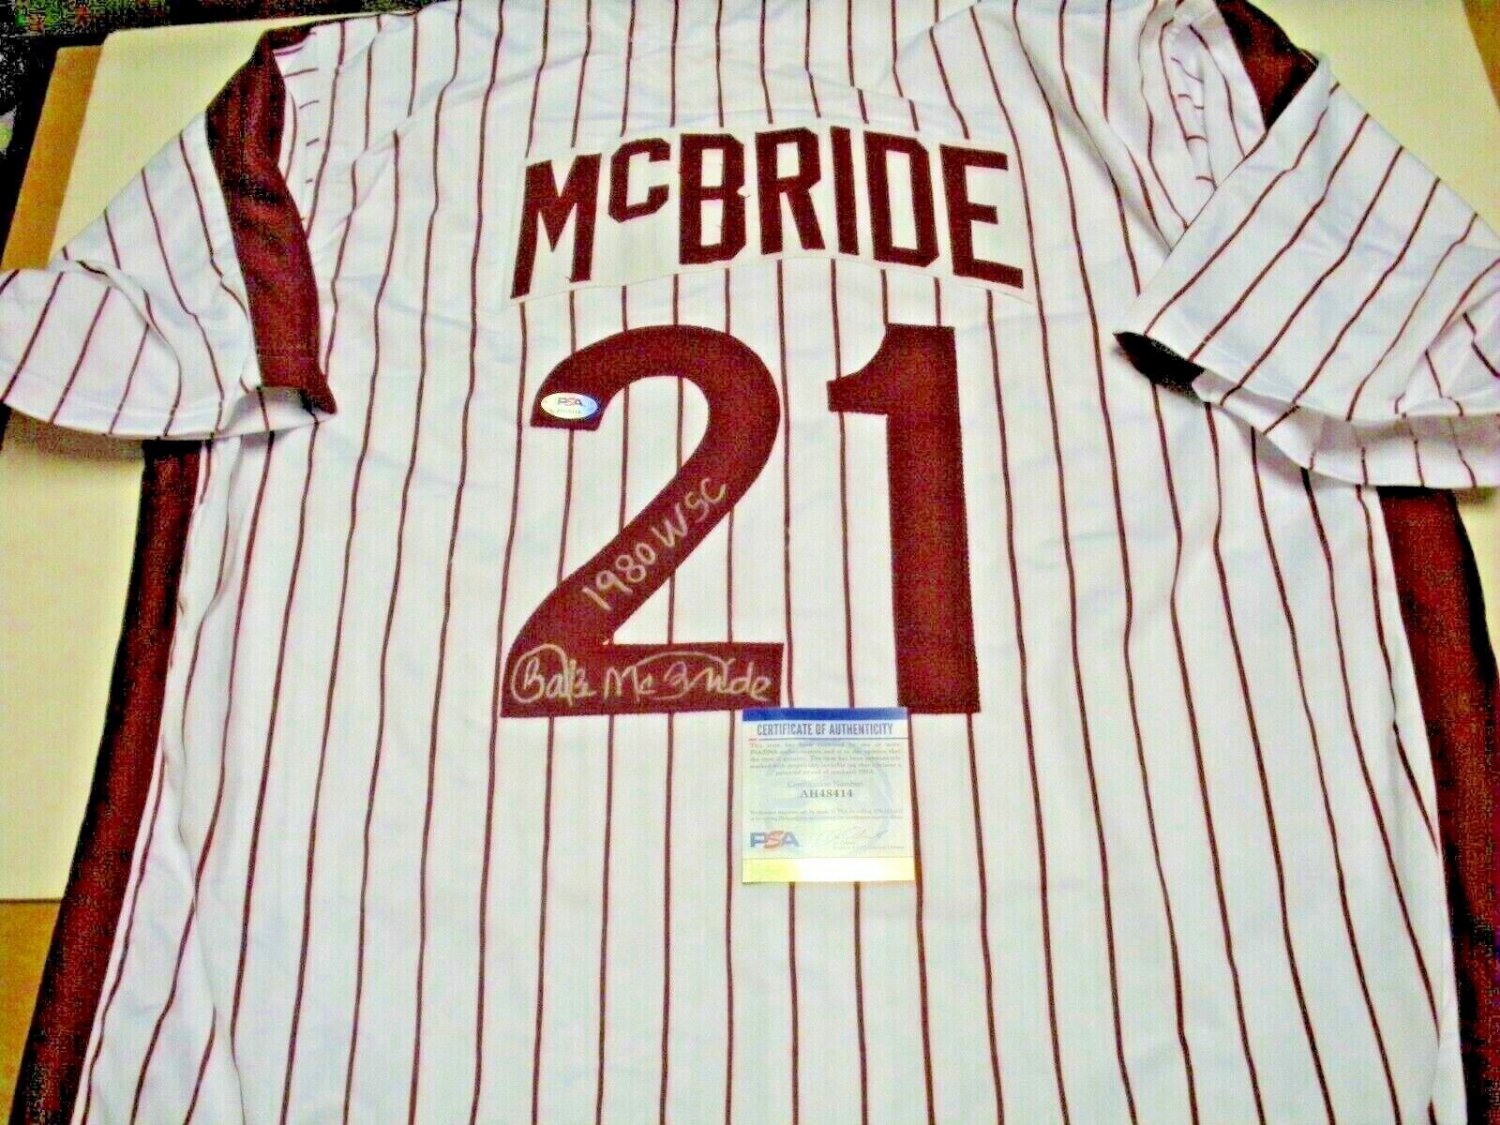 Philadelphia Phillies Bake McBride Autographed Jersey